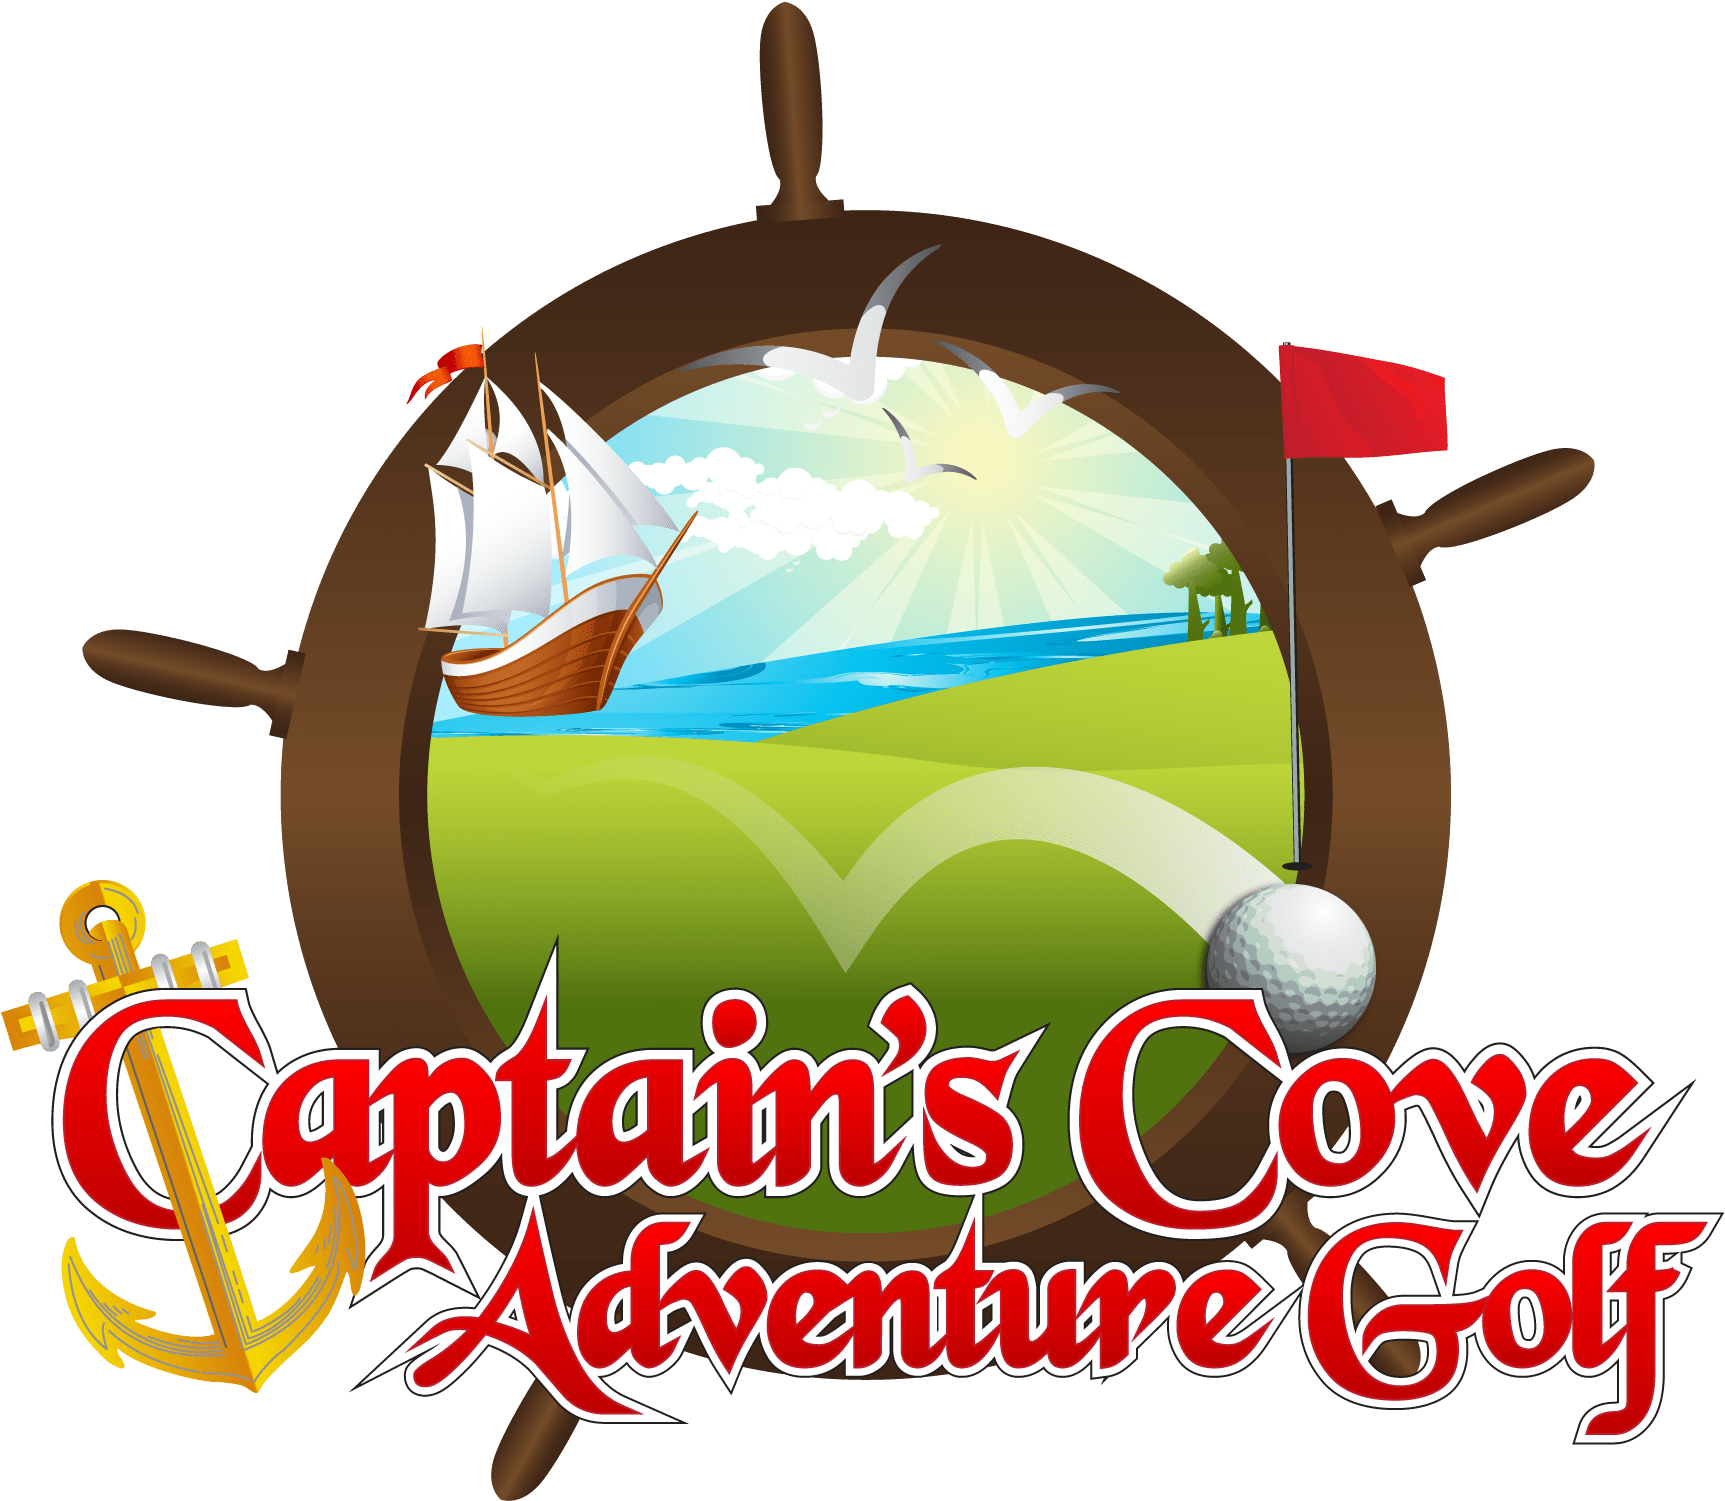 Captain's Cove Adventure Golf - Hampton (1983x1763)